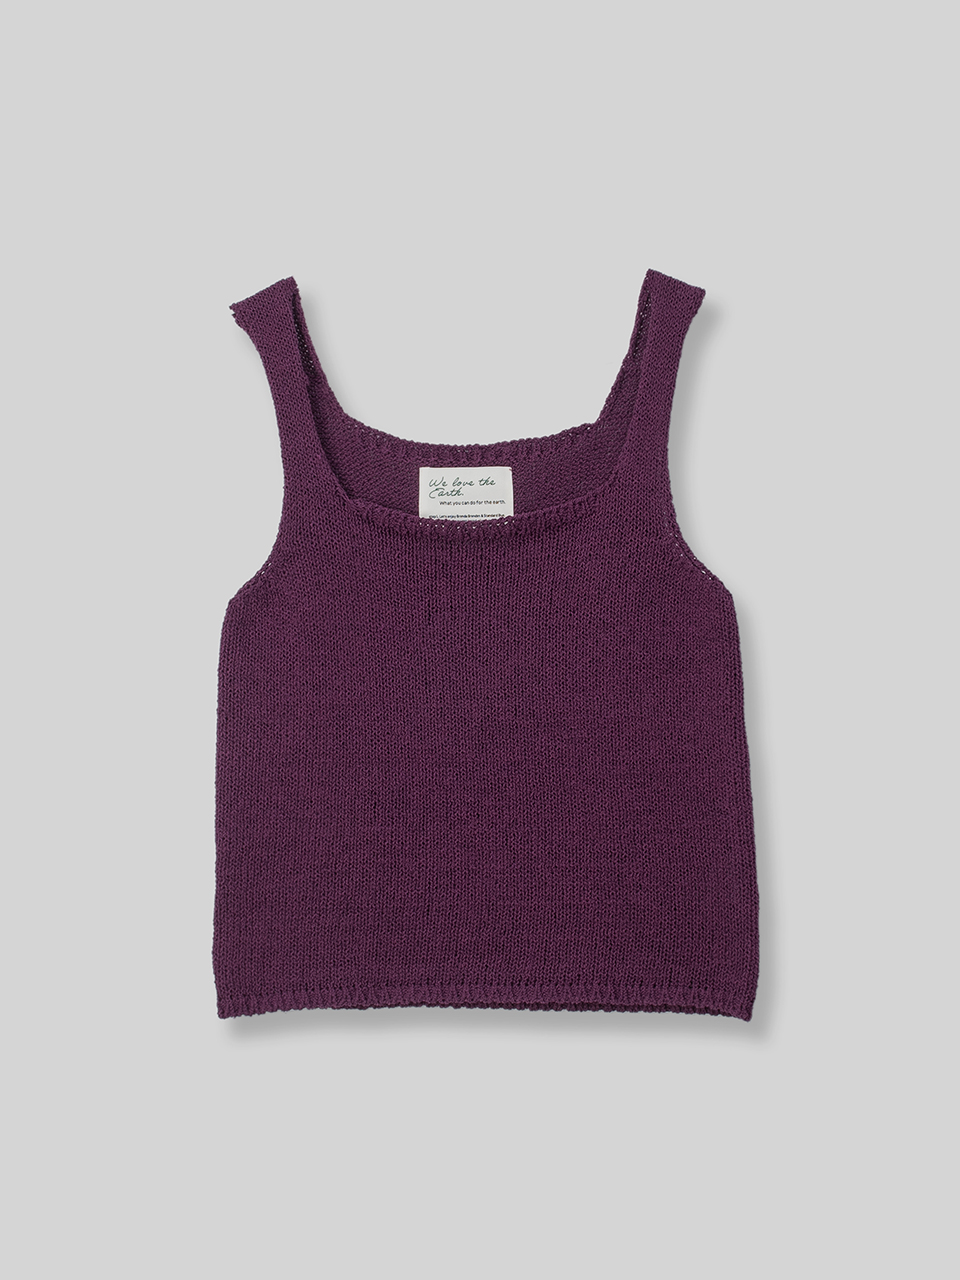 sleeveless knit top - purpleBRENDA BRENDEN